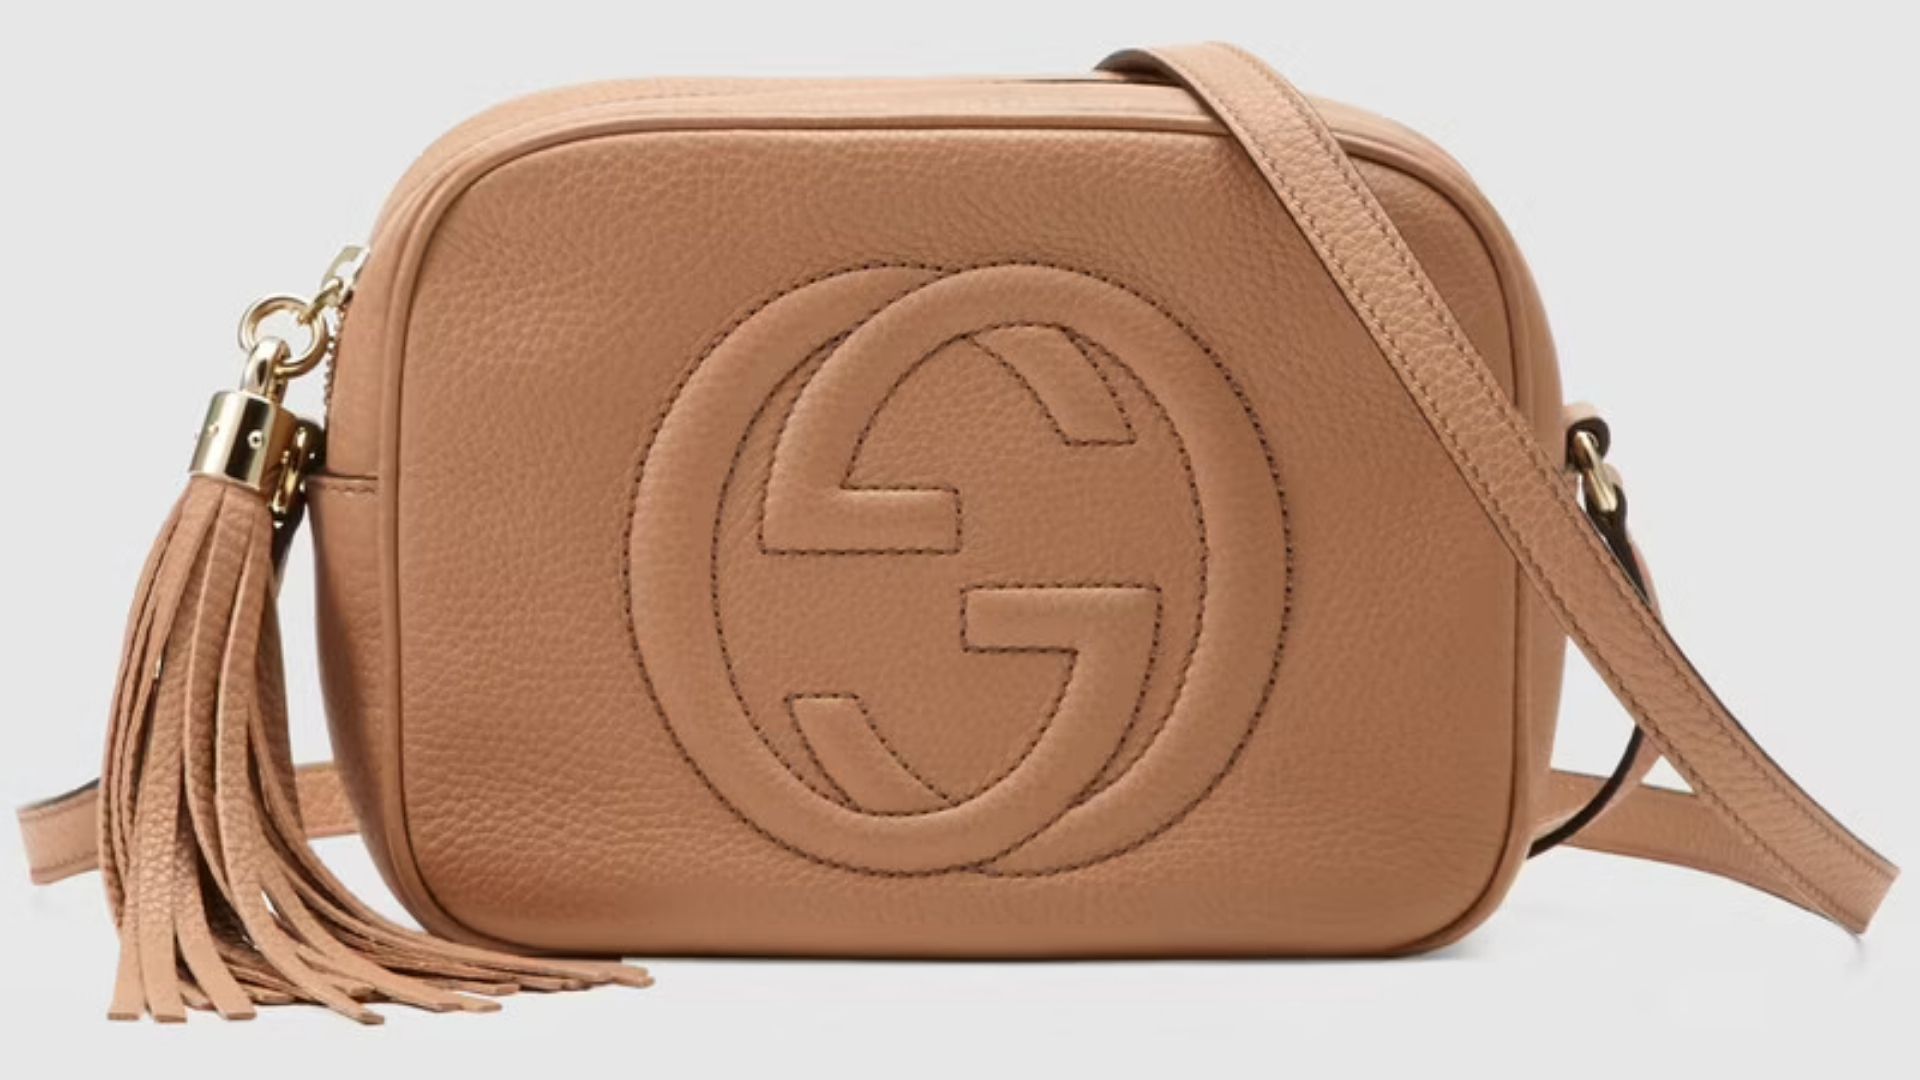 Iconic Gucci bags: Gucci Soho Disco bag